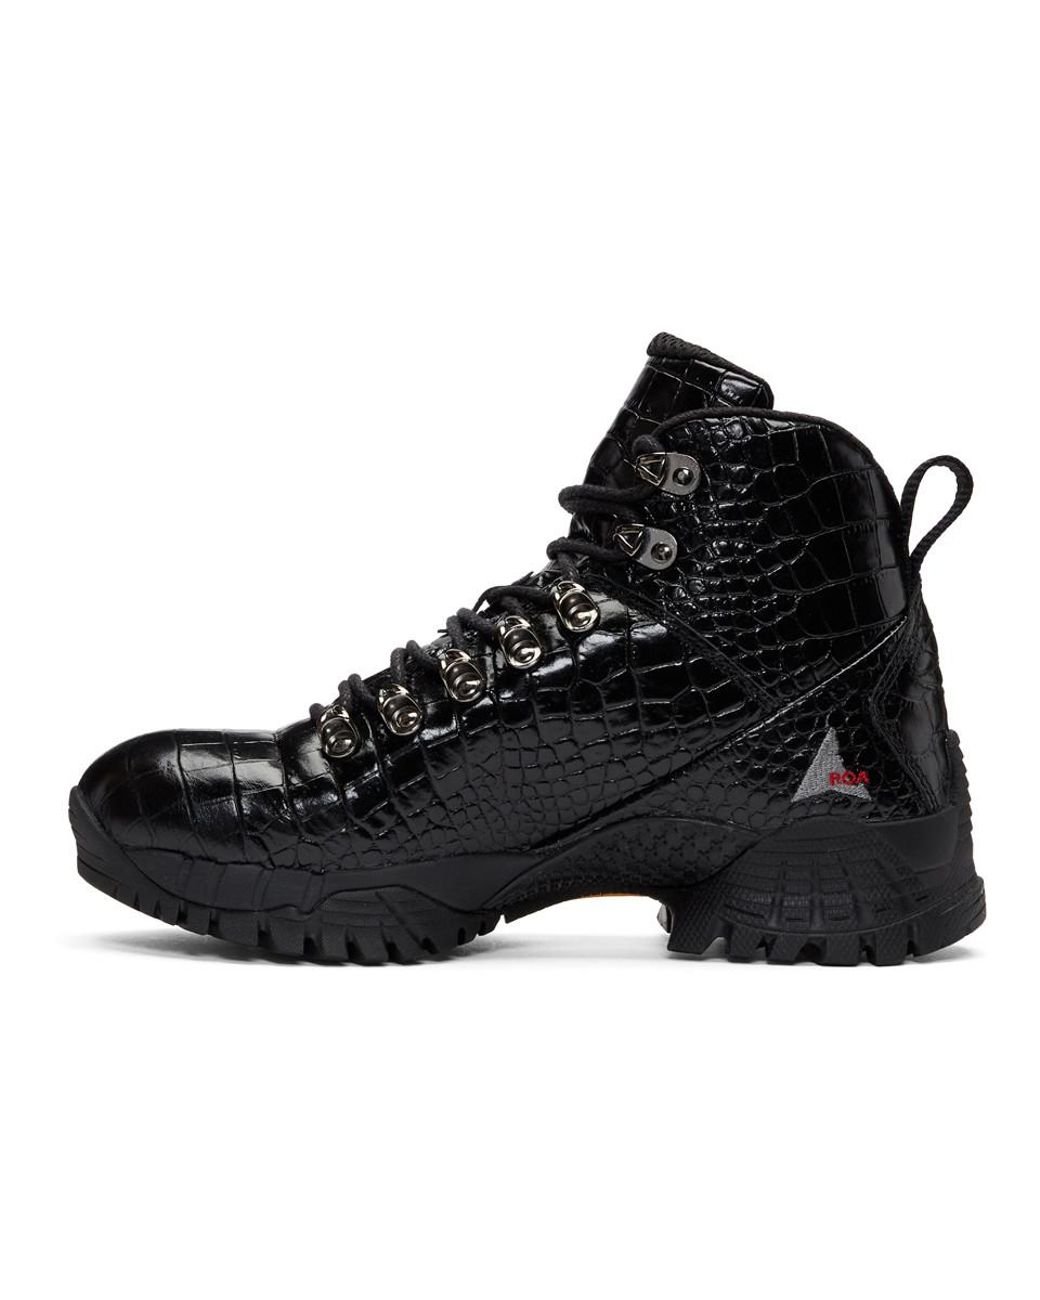 1017 ALYX 9SM Black Roa Croc Hiking Boots | Lyst